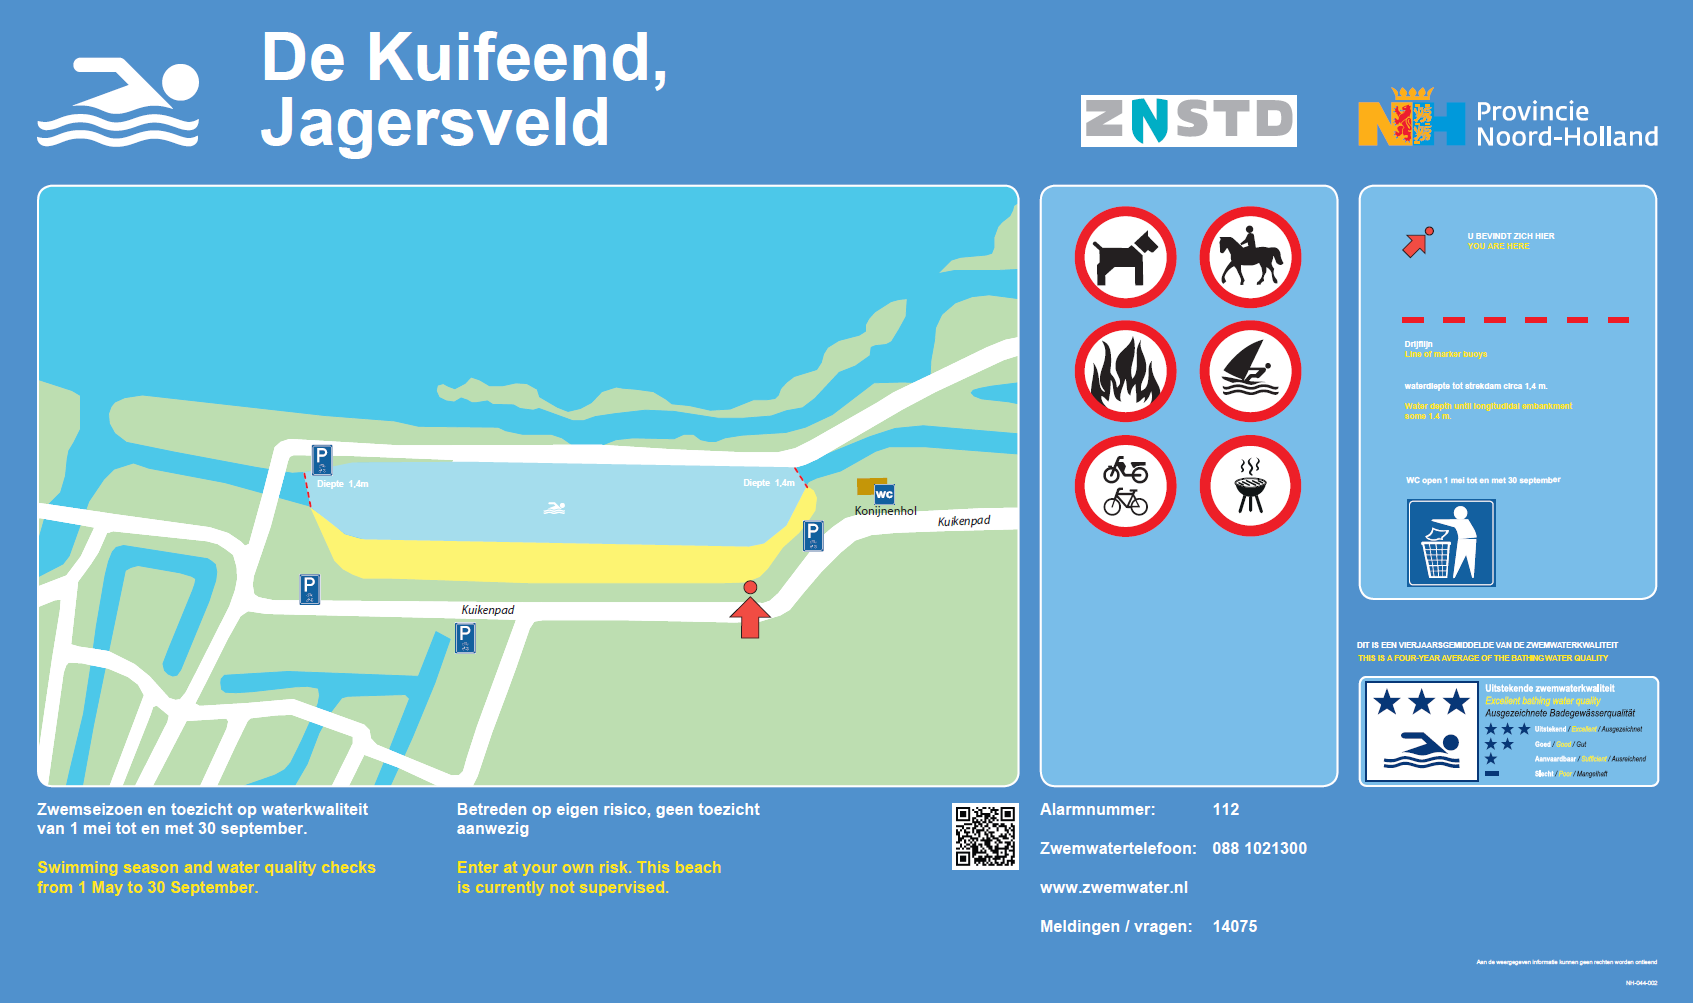 The information board at the swimming location De Kuifeend; Jagersveld